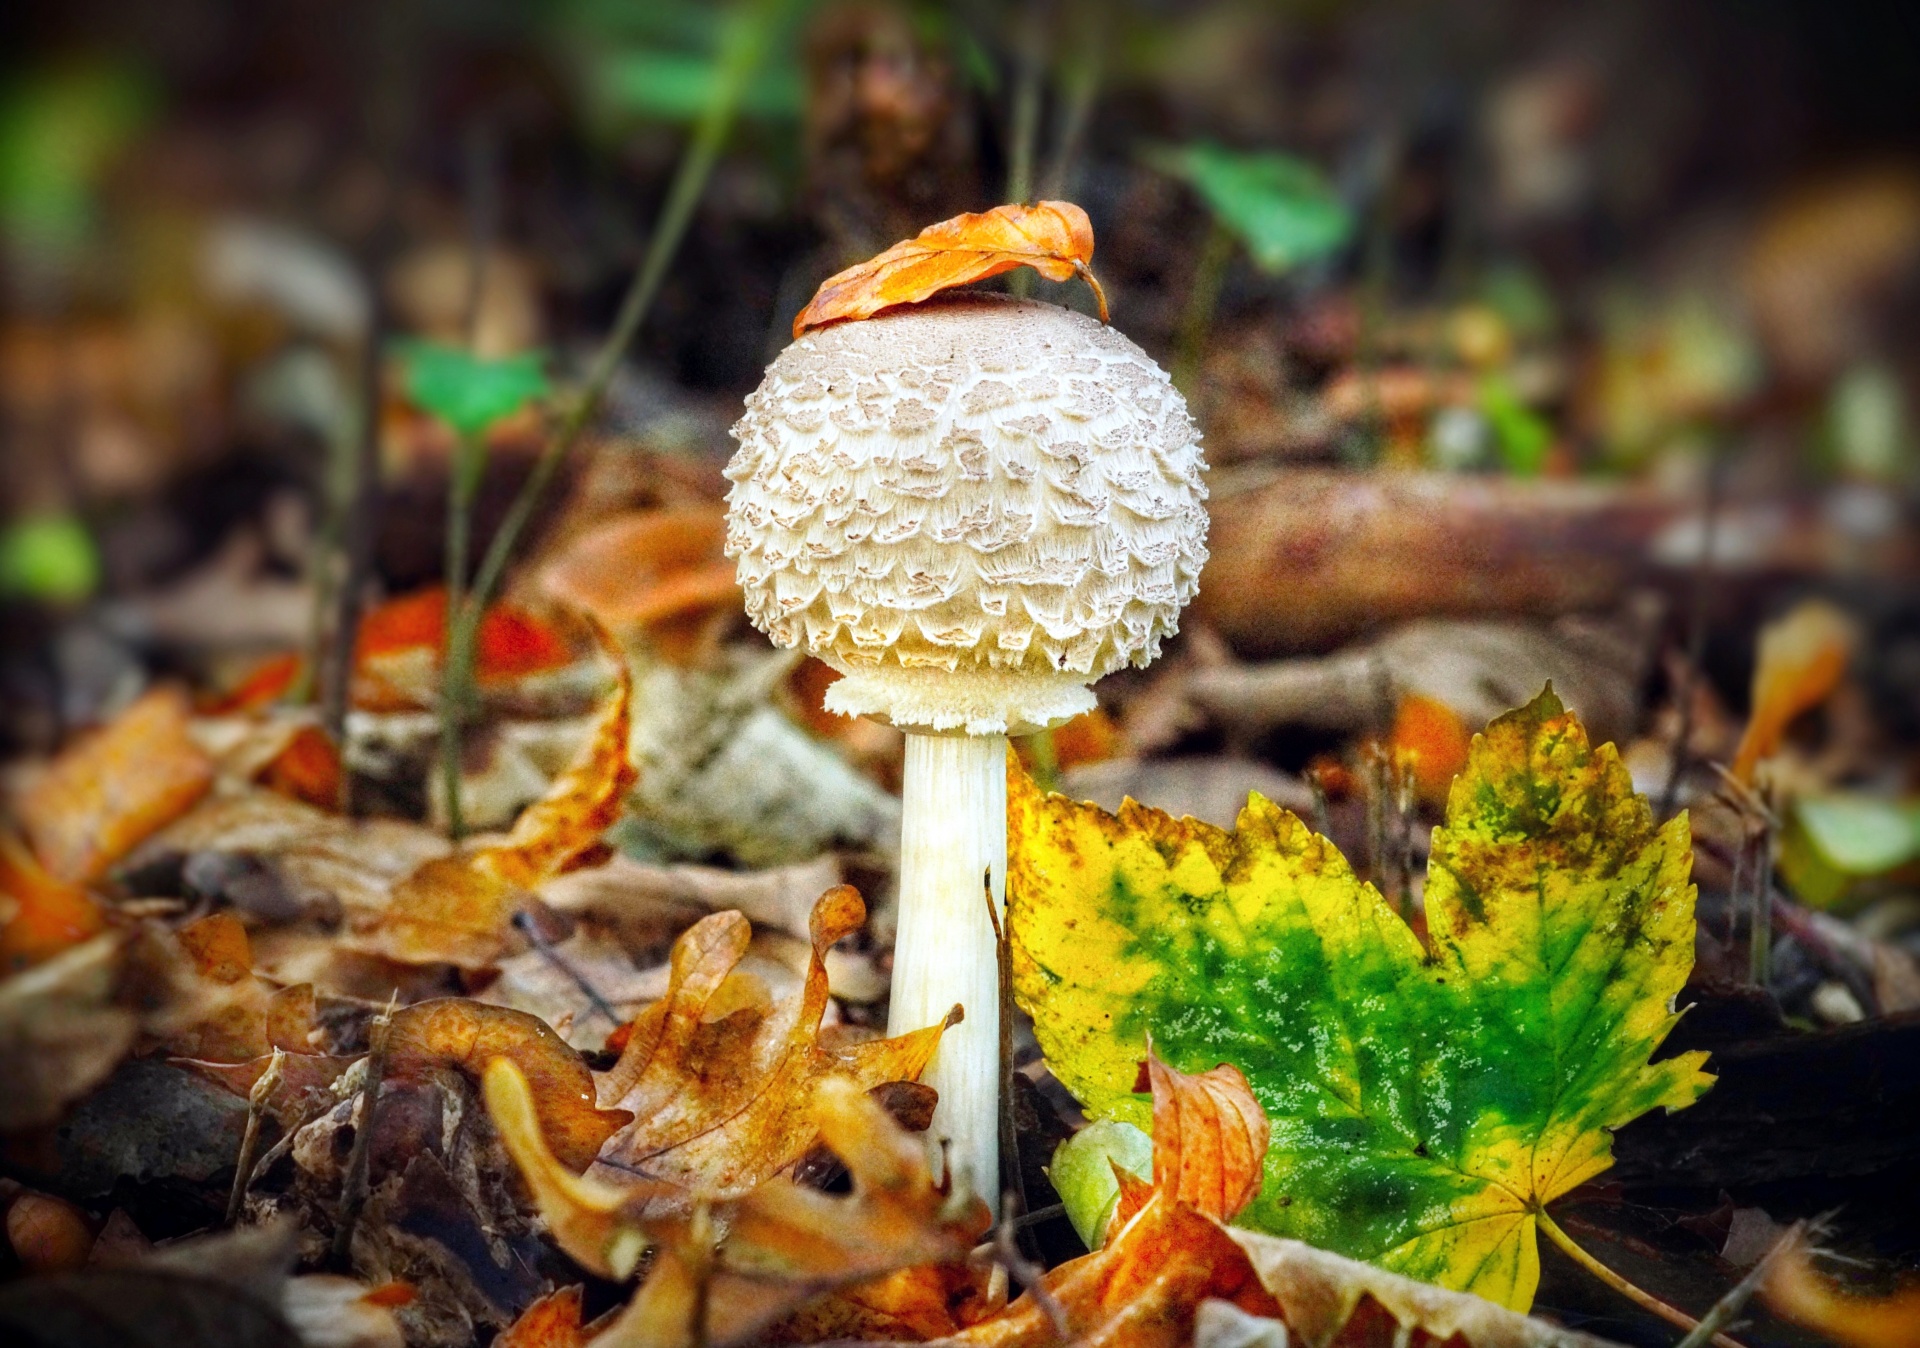 Mushroom Champion Autumn Leaves Fall Nature Macro Photography Close Up Details